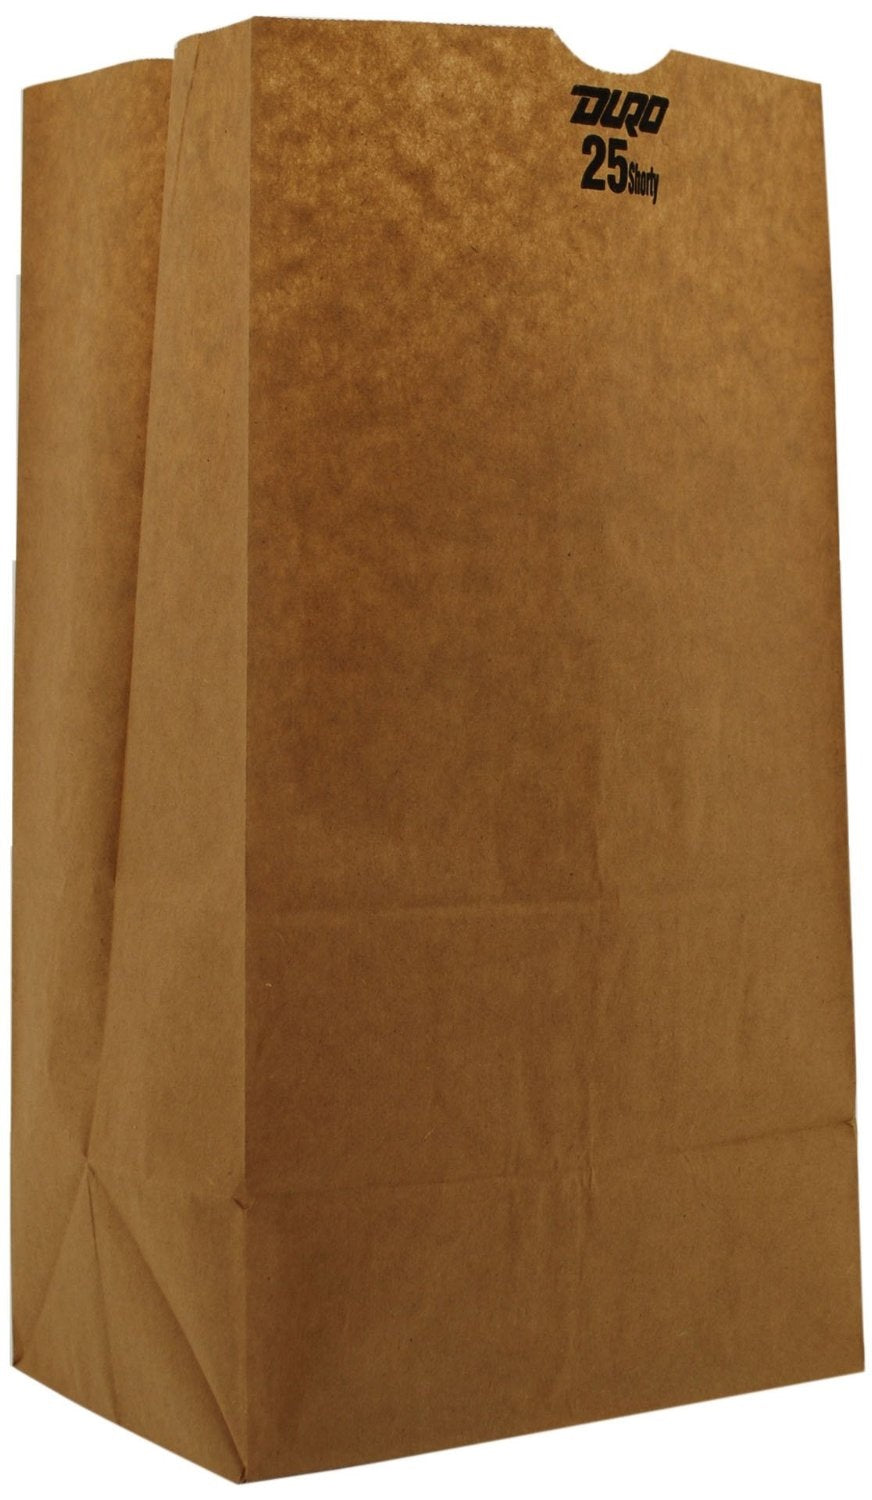 Duro 18428 Grocery Bag, Kraft Paper, Brown